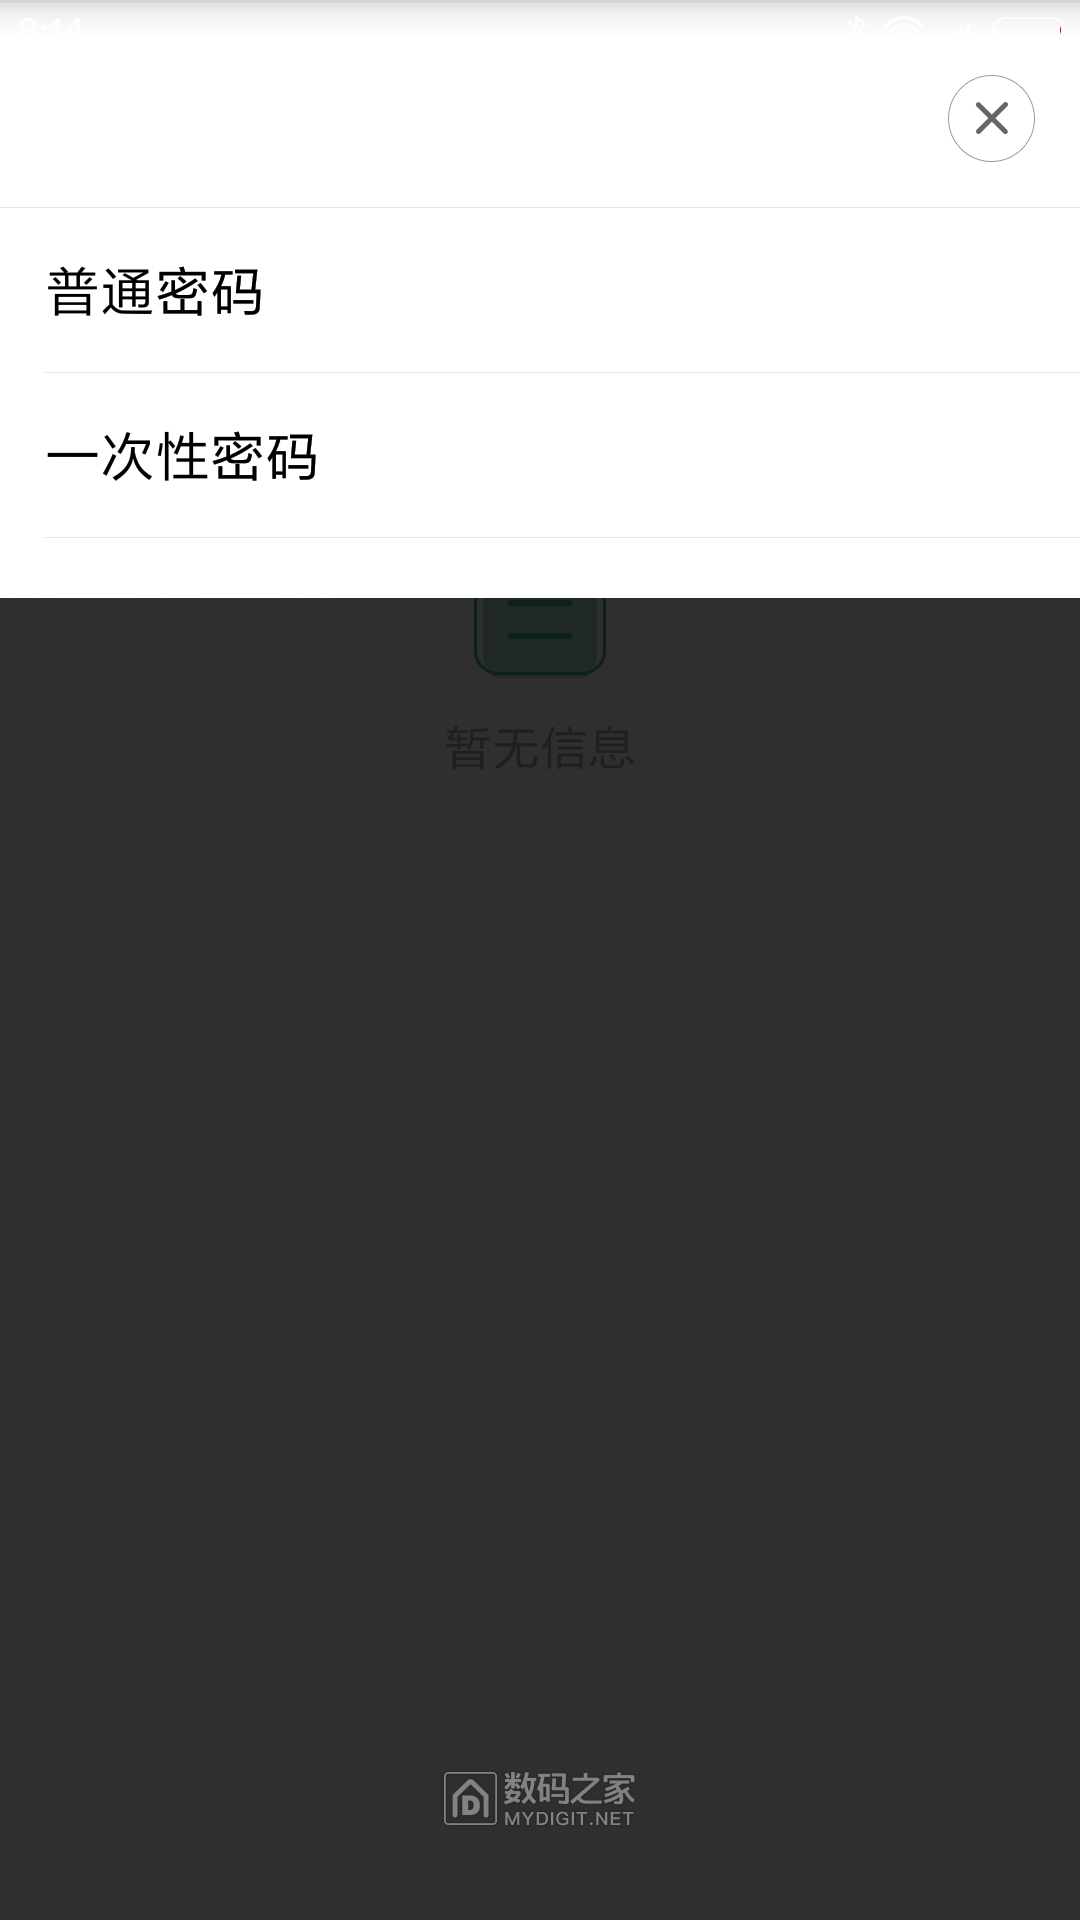 Screenshot_2019-01-29-08-14-37_com.xiaomi.smartho.png